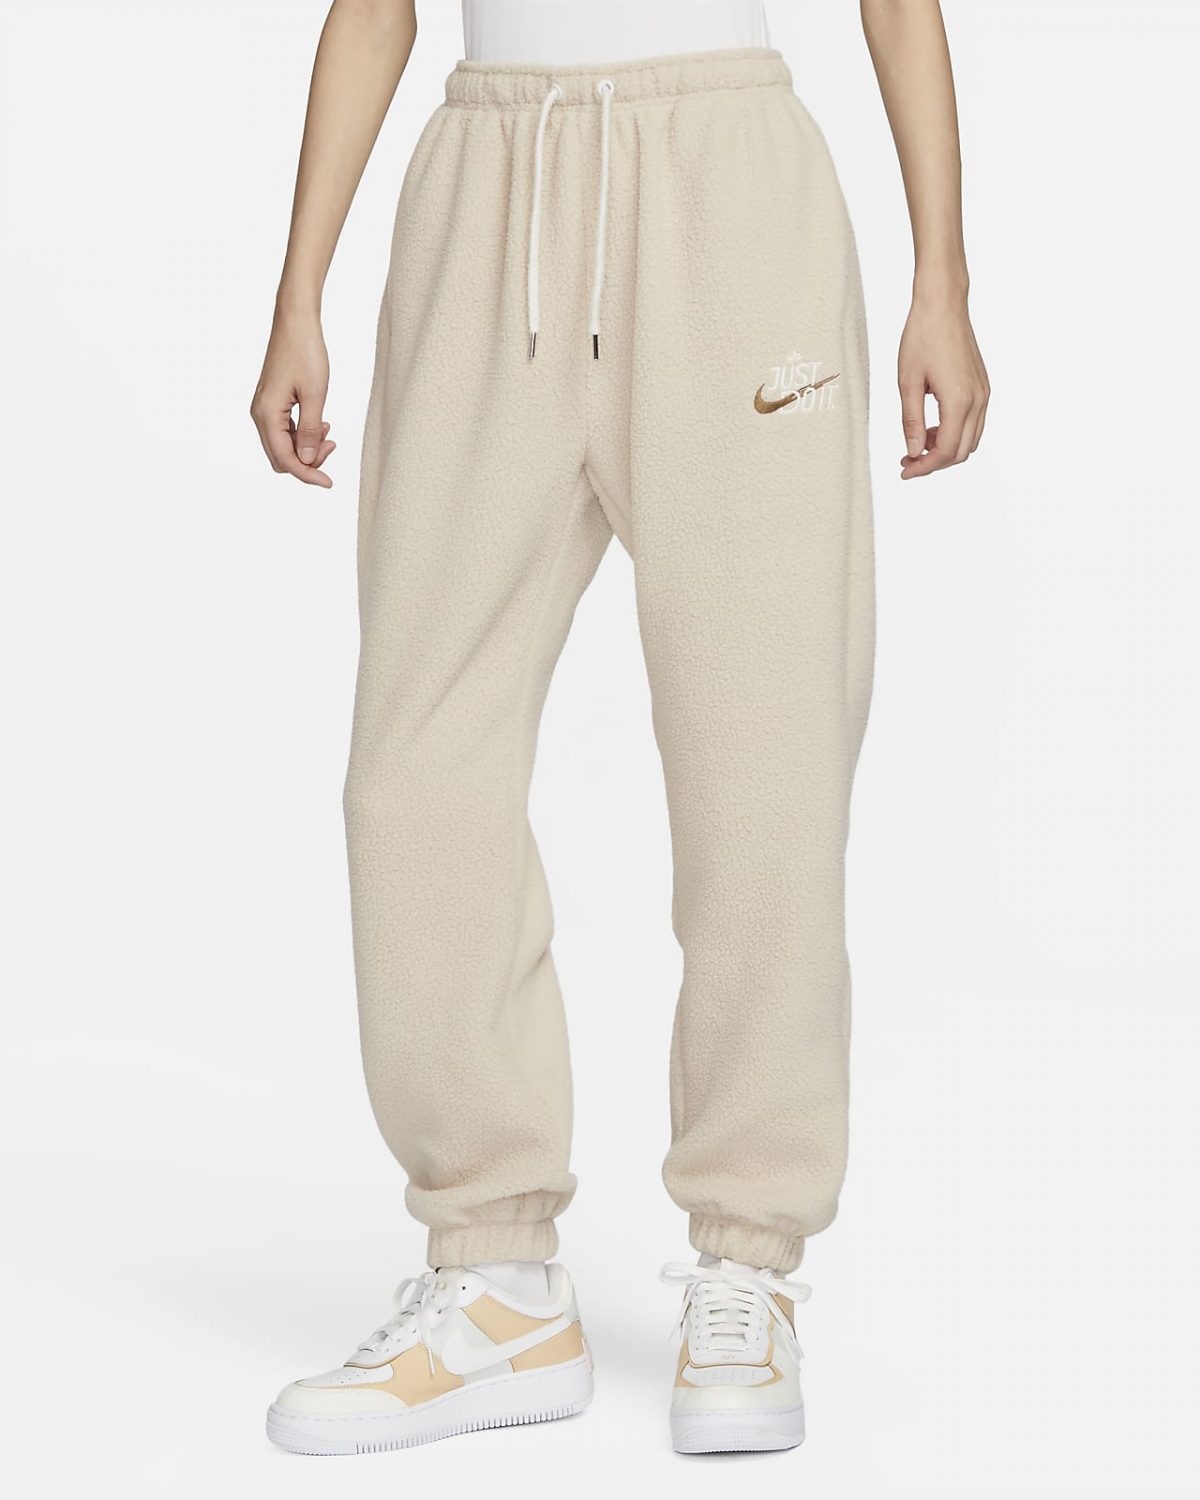 Женские брюки Nike Sportswear Plush фото